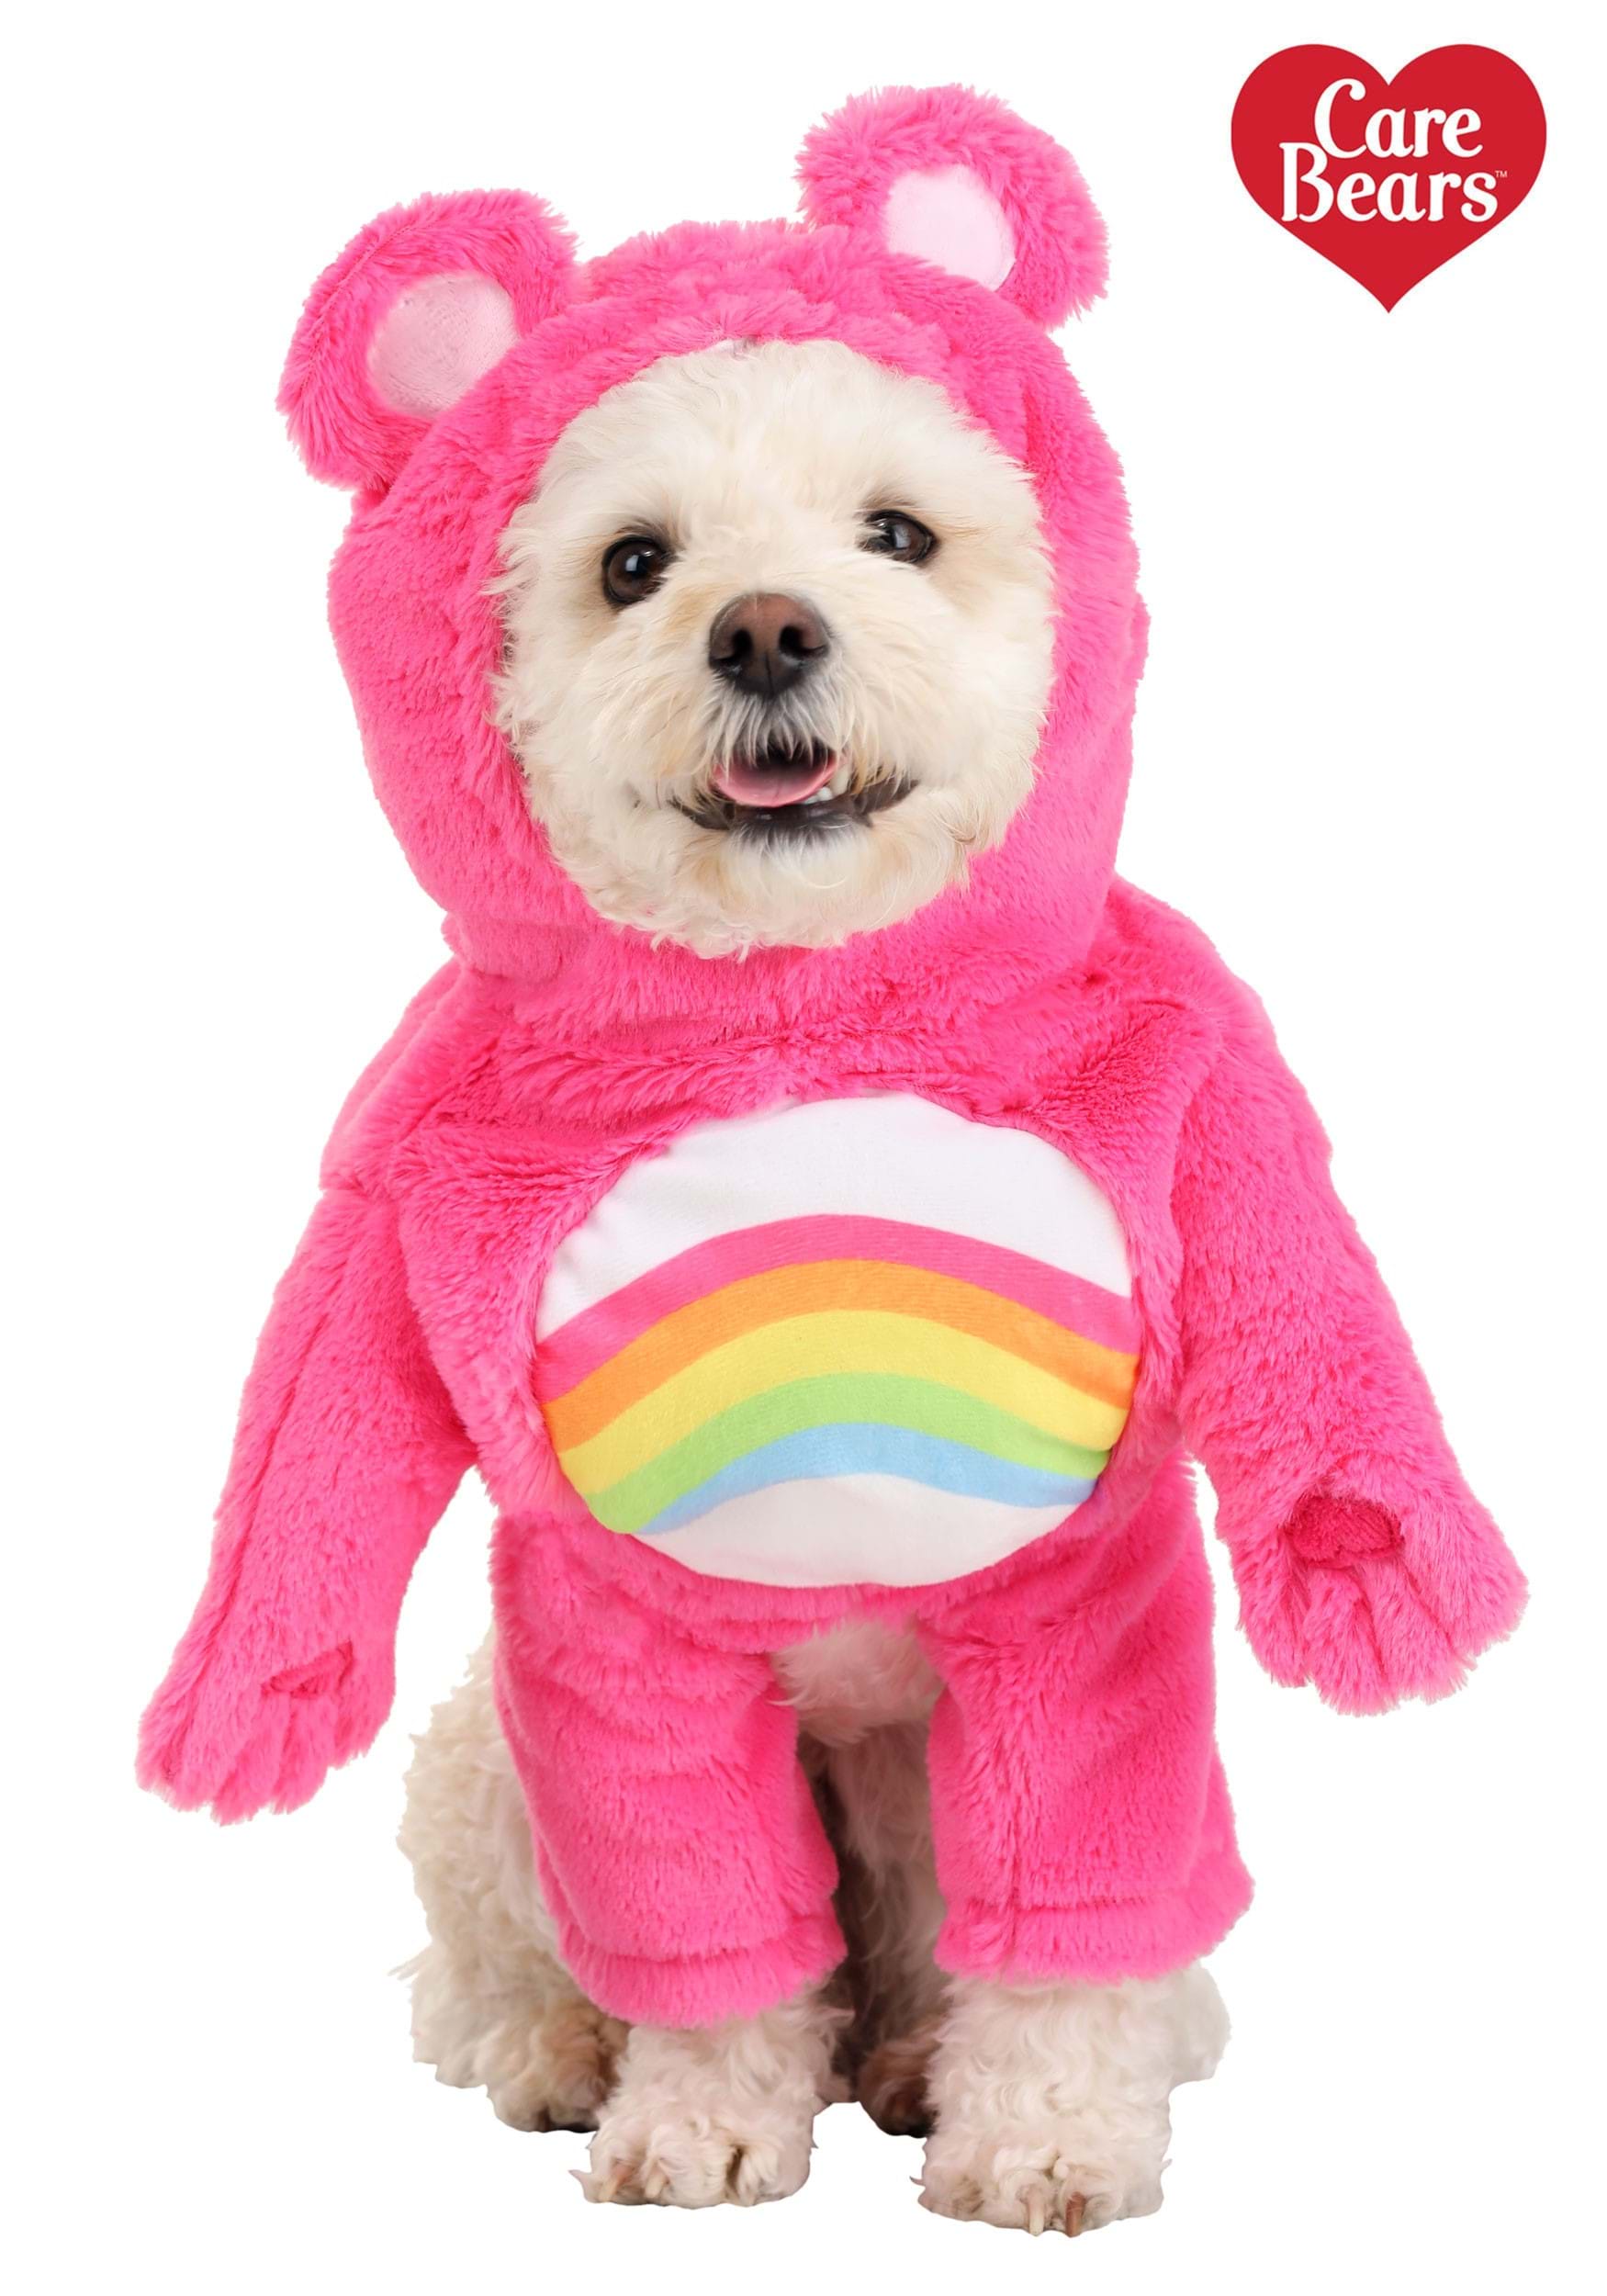 Cheer Bear Care Bears Dog Costume